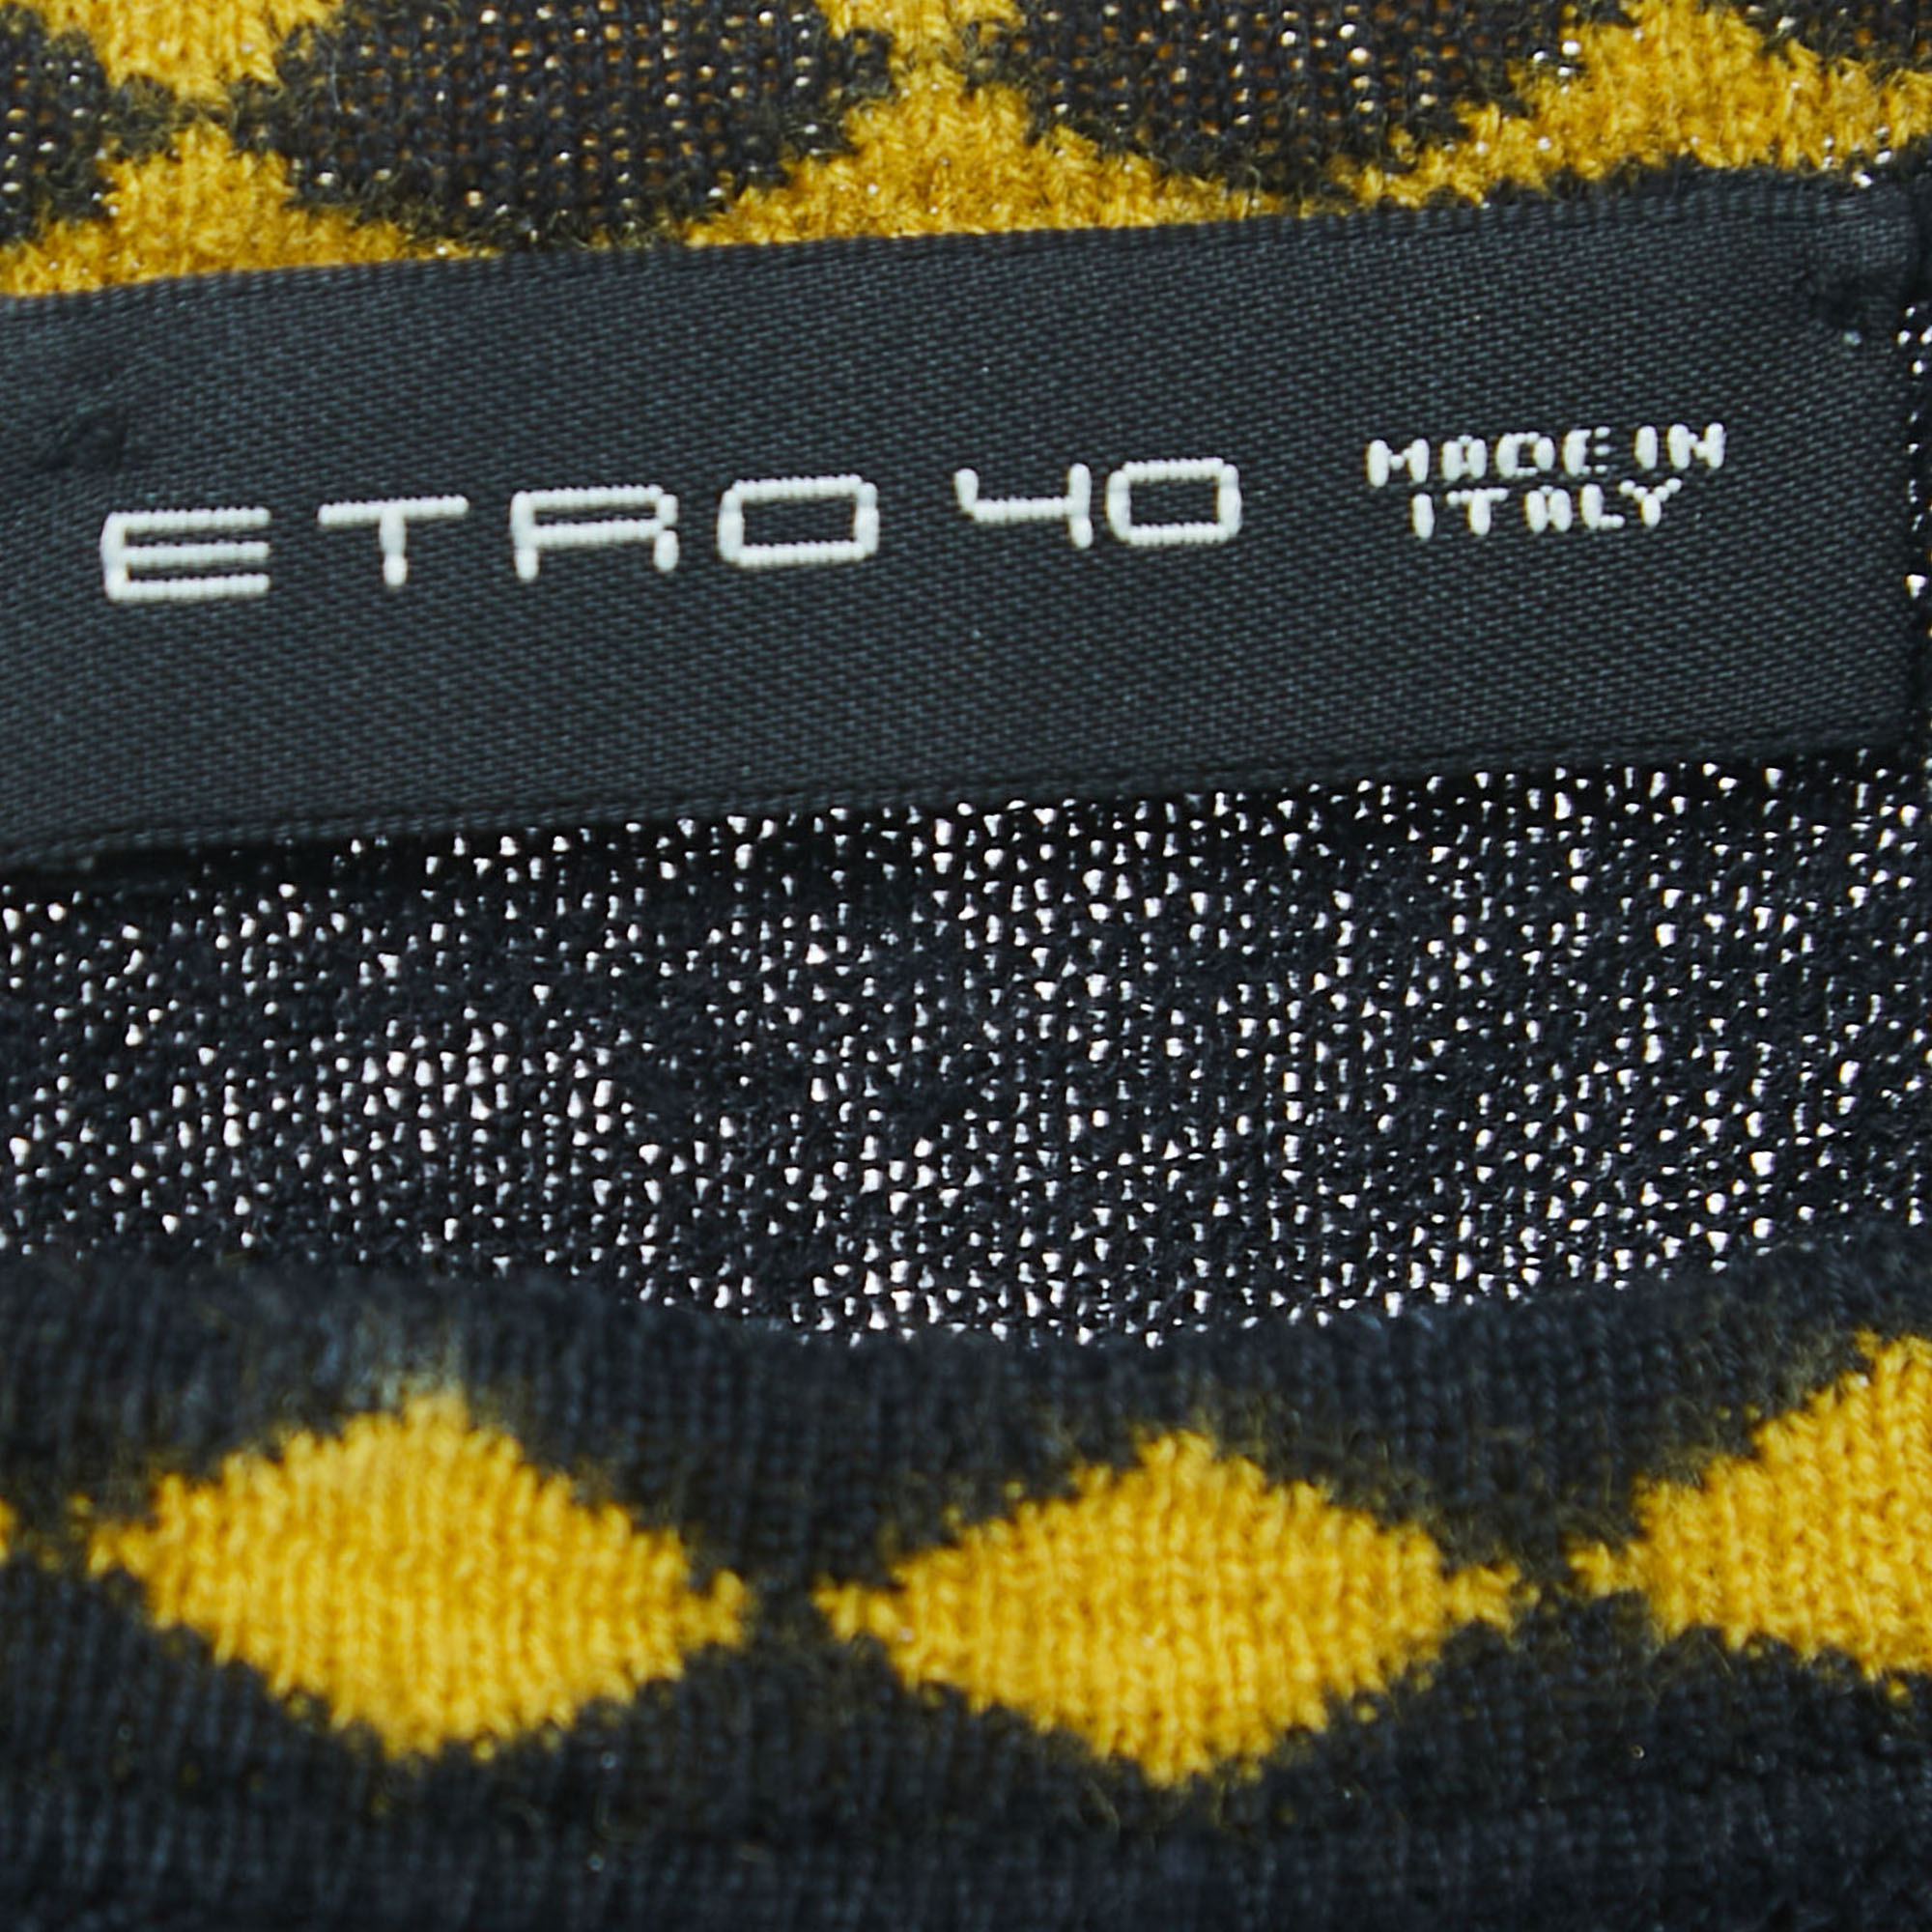 Etro Black/Multicolor Patterned Knit Top S